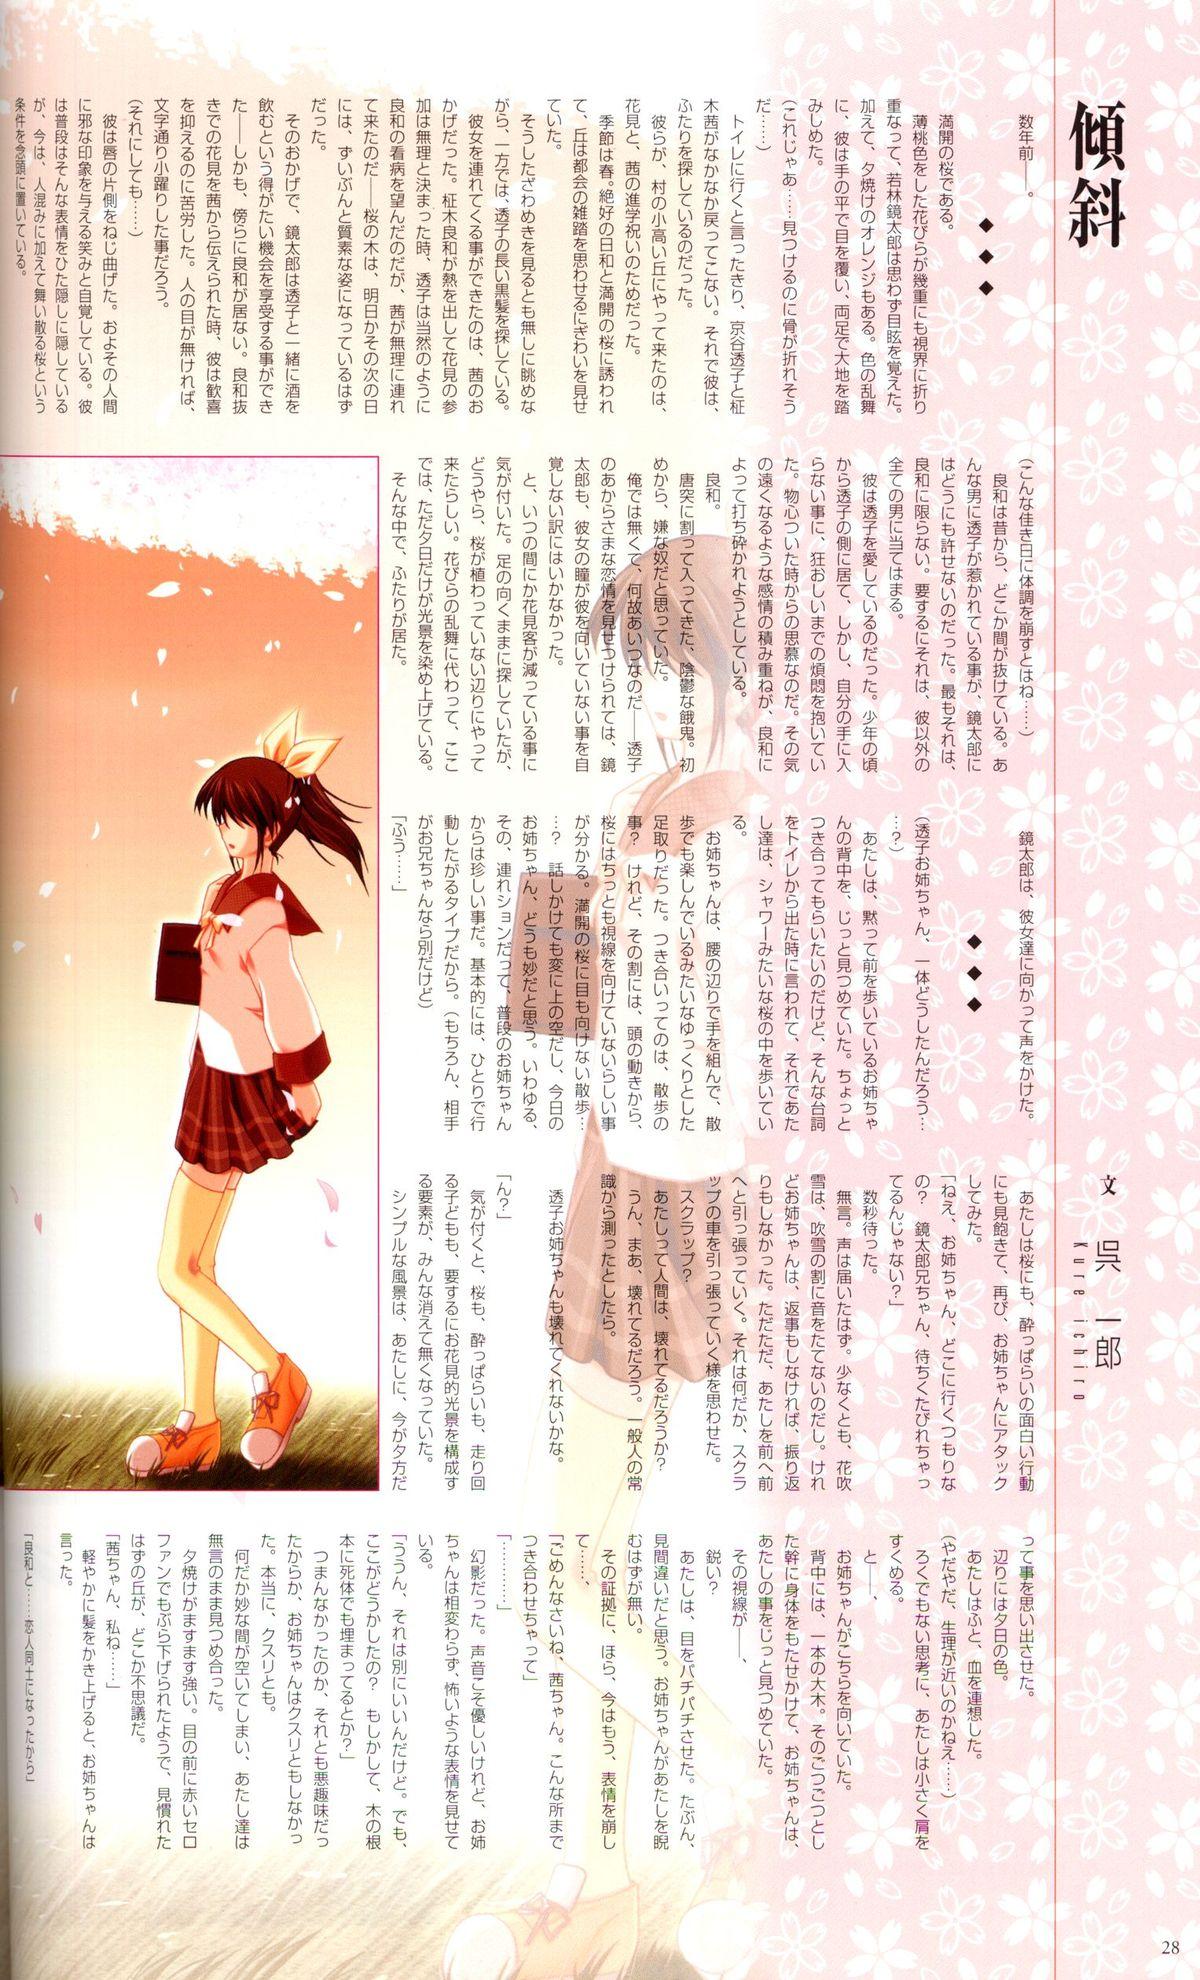 SUIKA Official Visual Fan Book 36